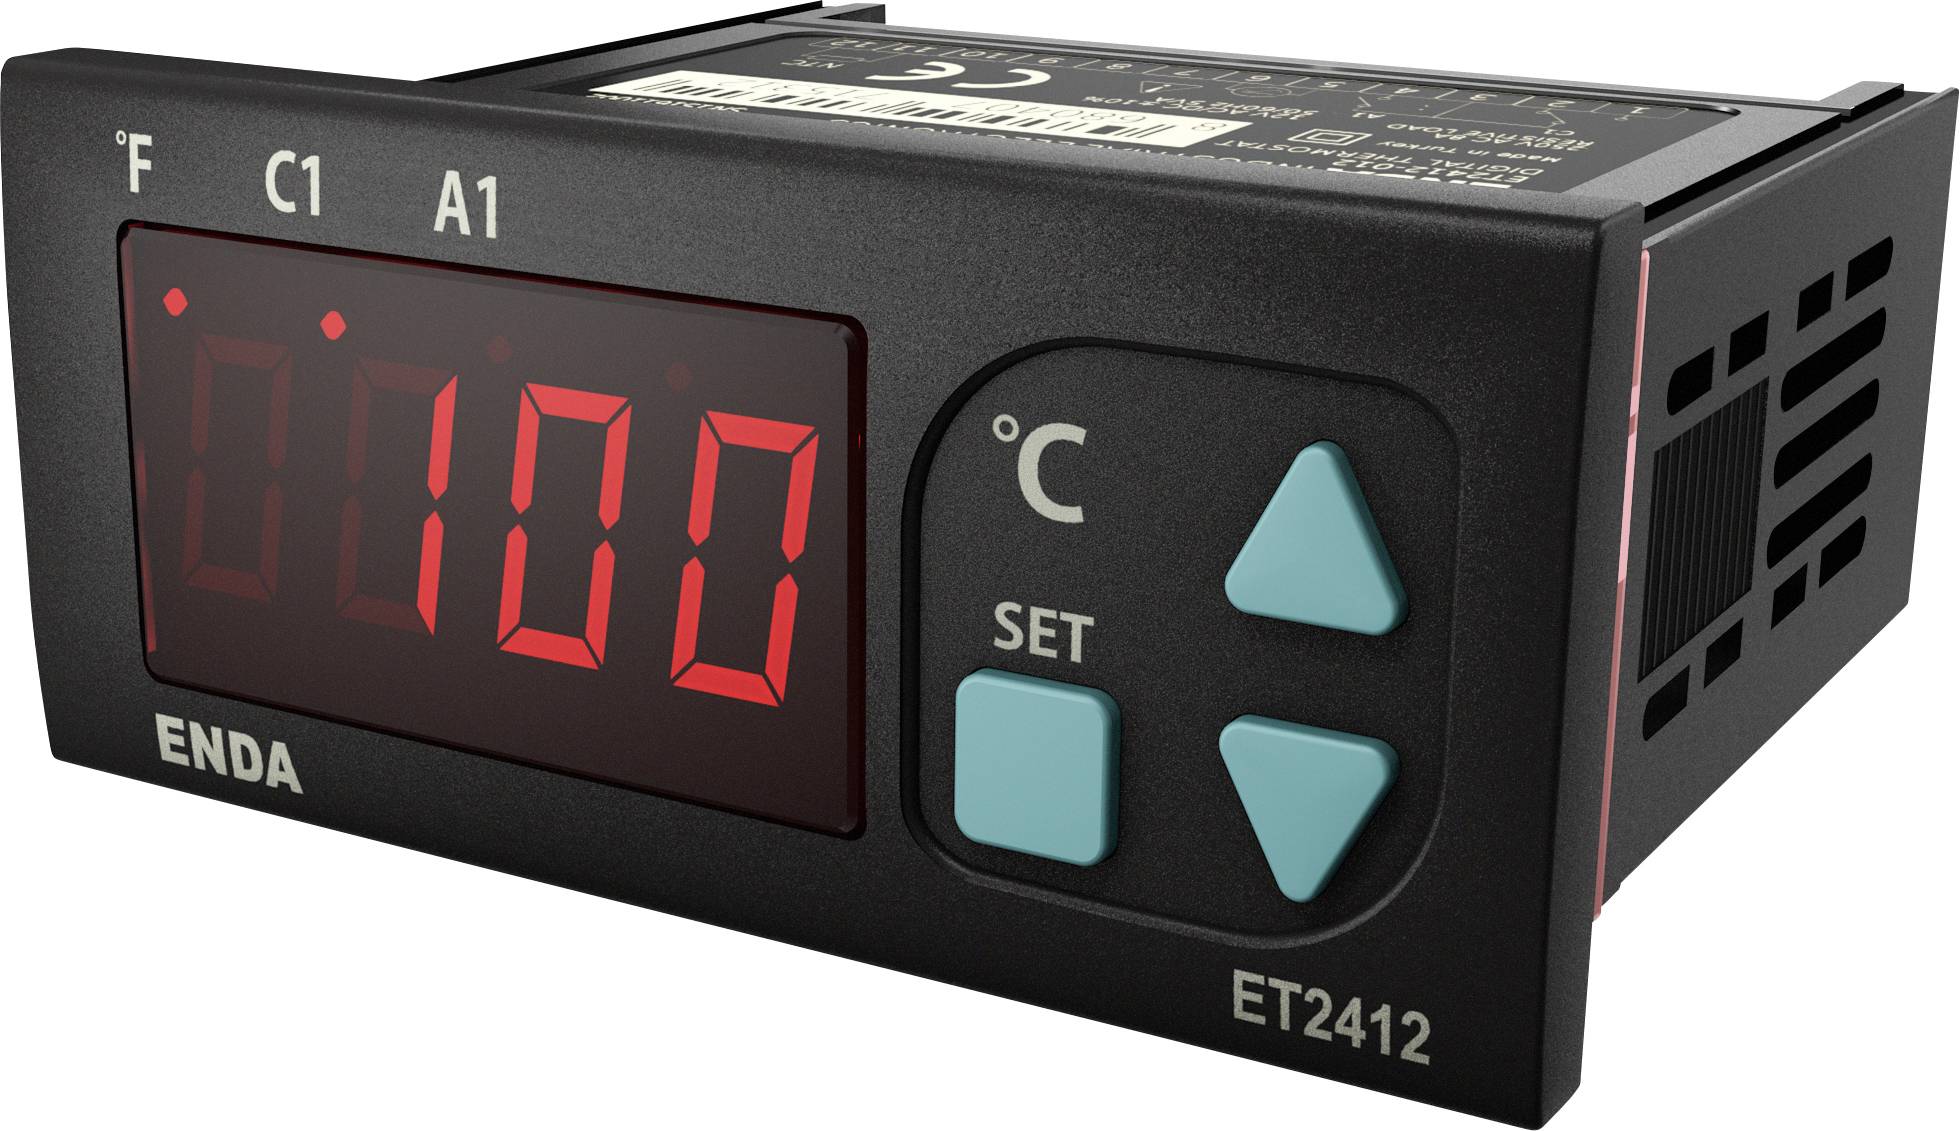 F&F RT-822 Temperaturregler 230V AC 16A Temperaturregelbereich 30°C bis  60°C DIN